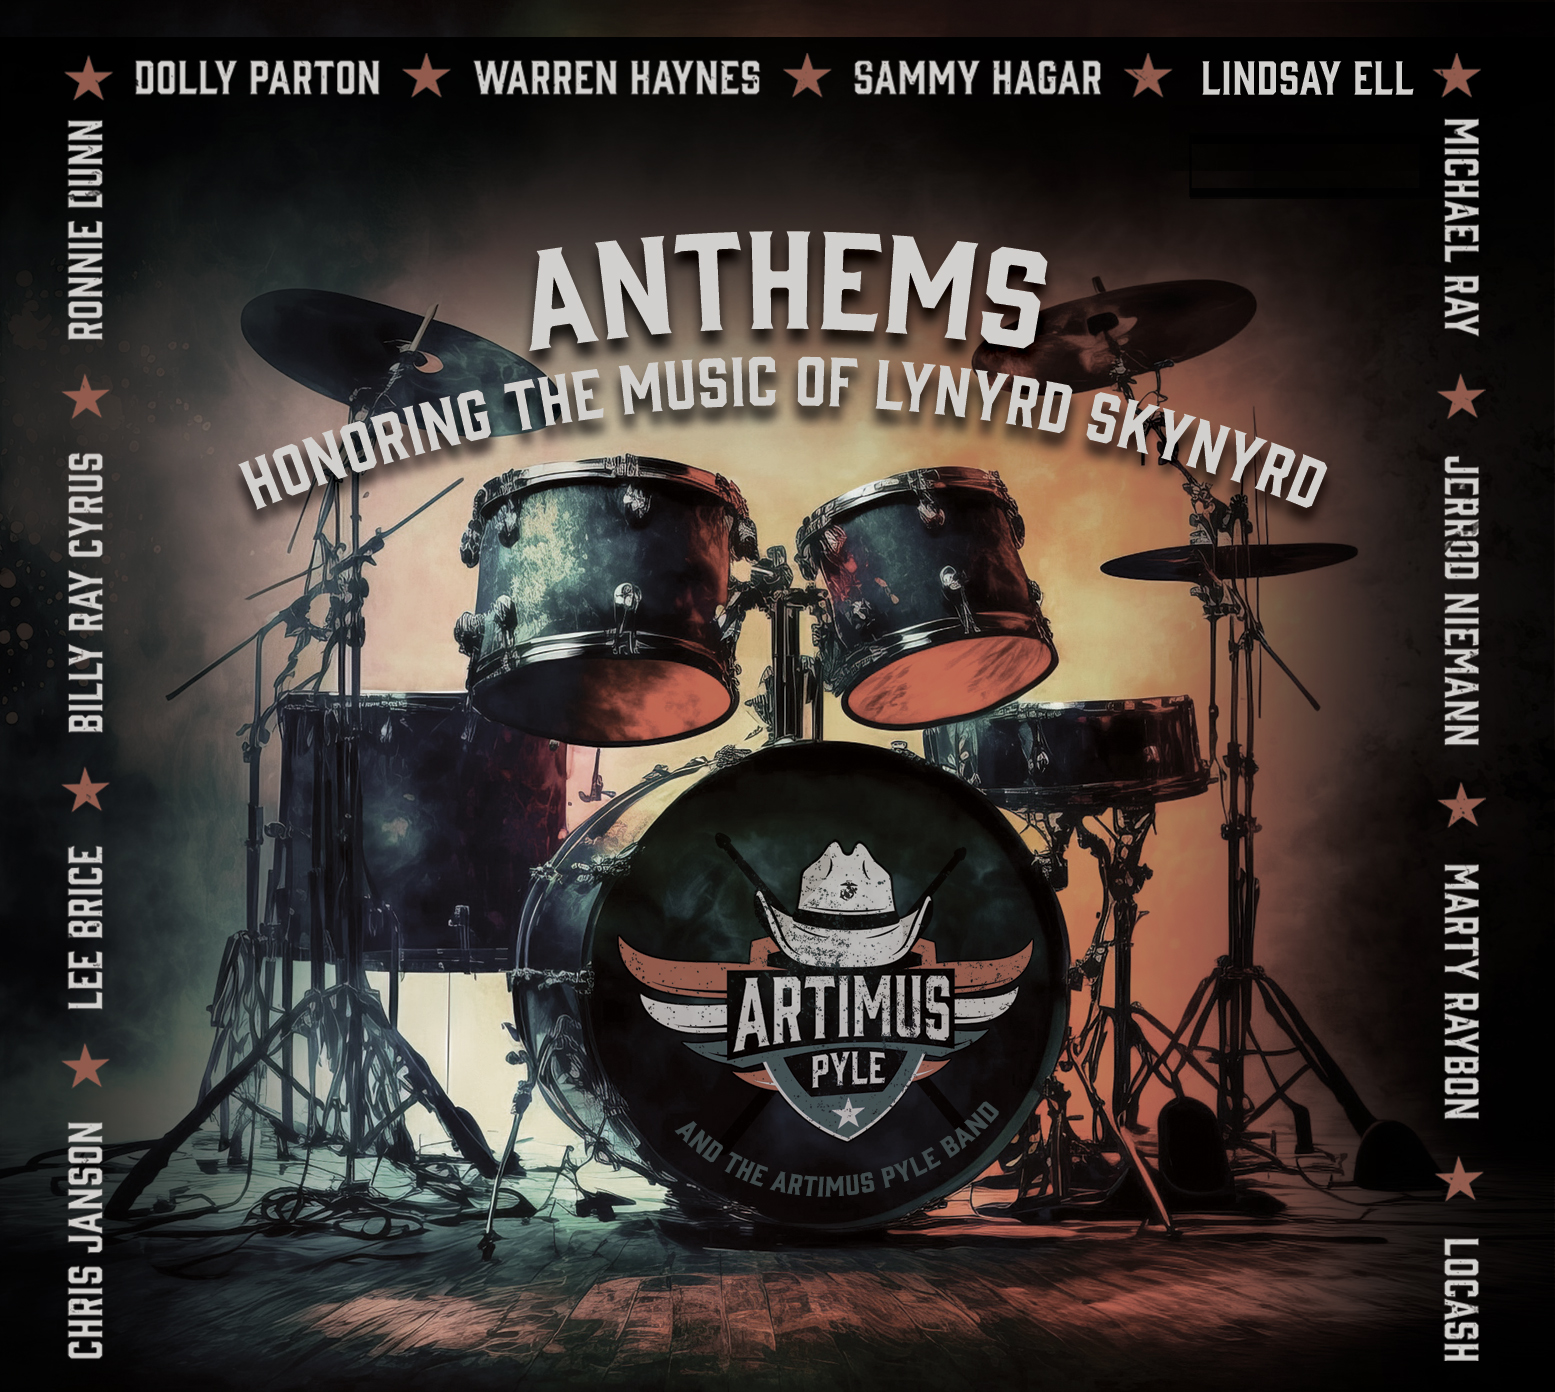 Artimus Pyle, Rock & Roll Hall Member & Former Lynyrd Skynyrd Drummer, Releases New Album 'Anthems - Honoring The Music of Lynyrd Skynyrd' Today